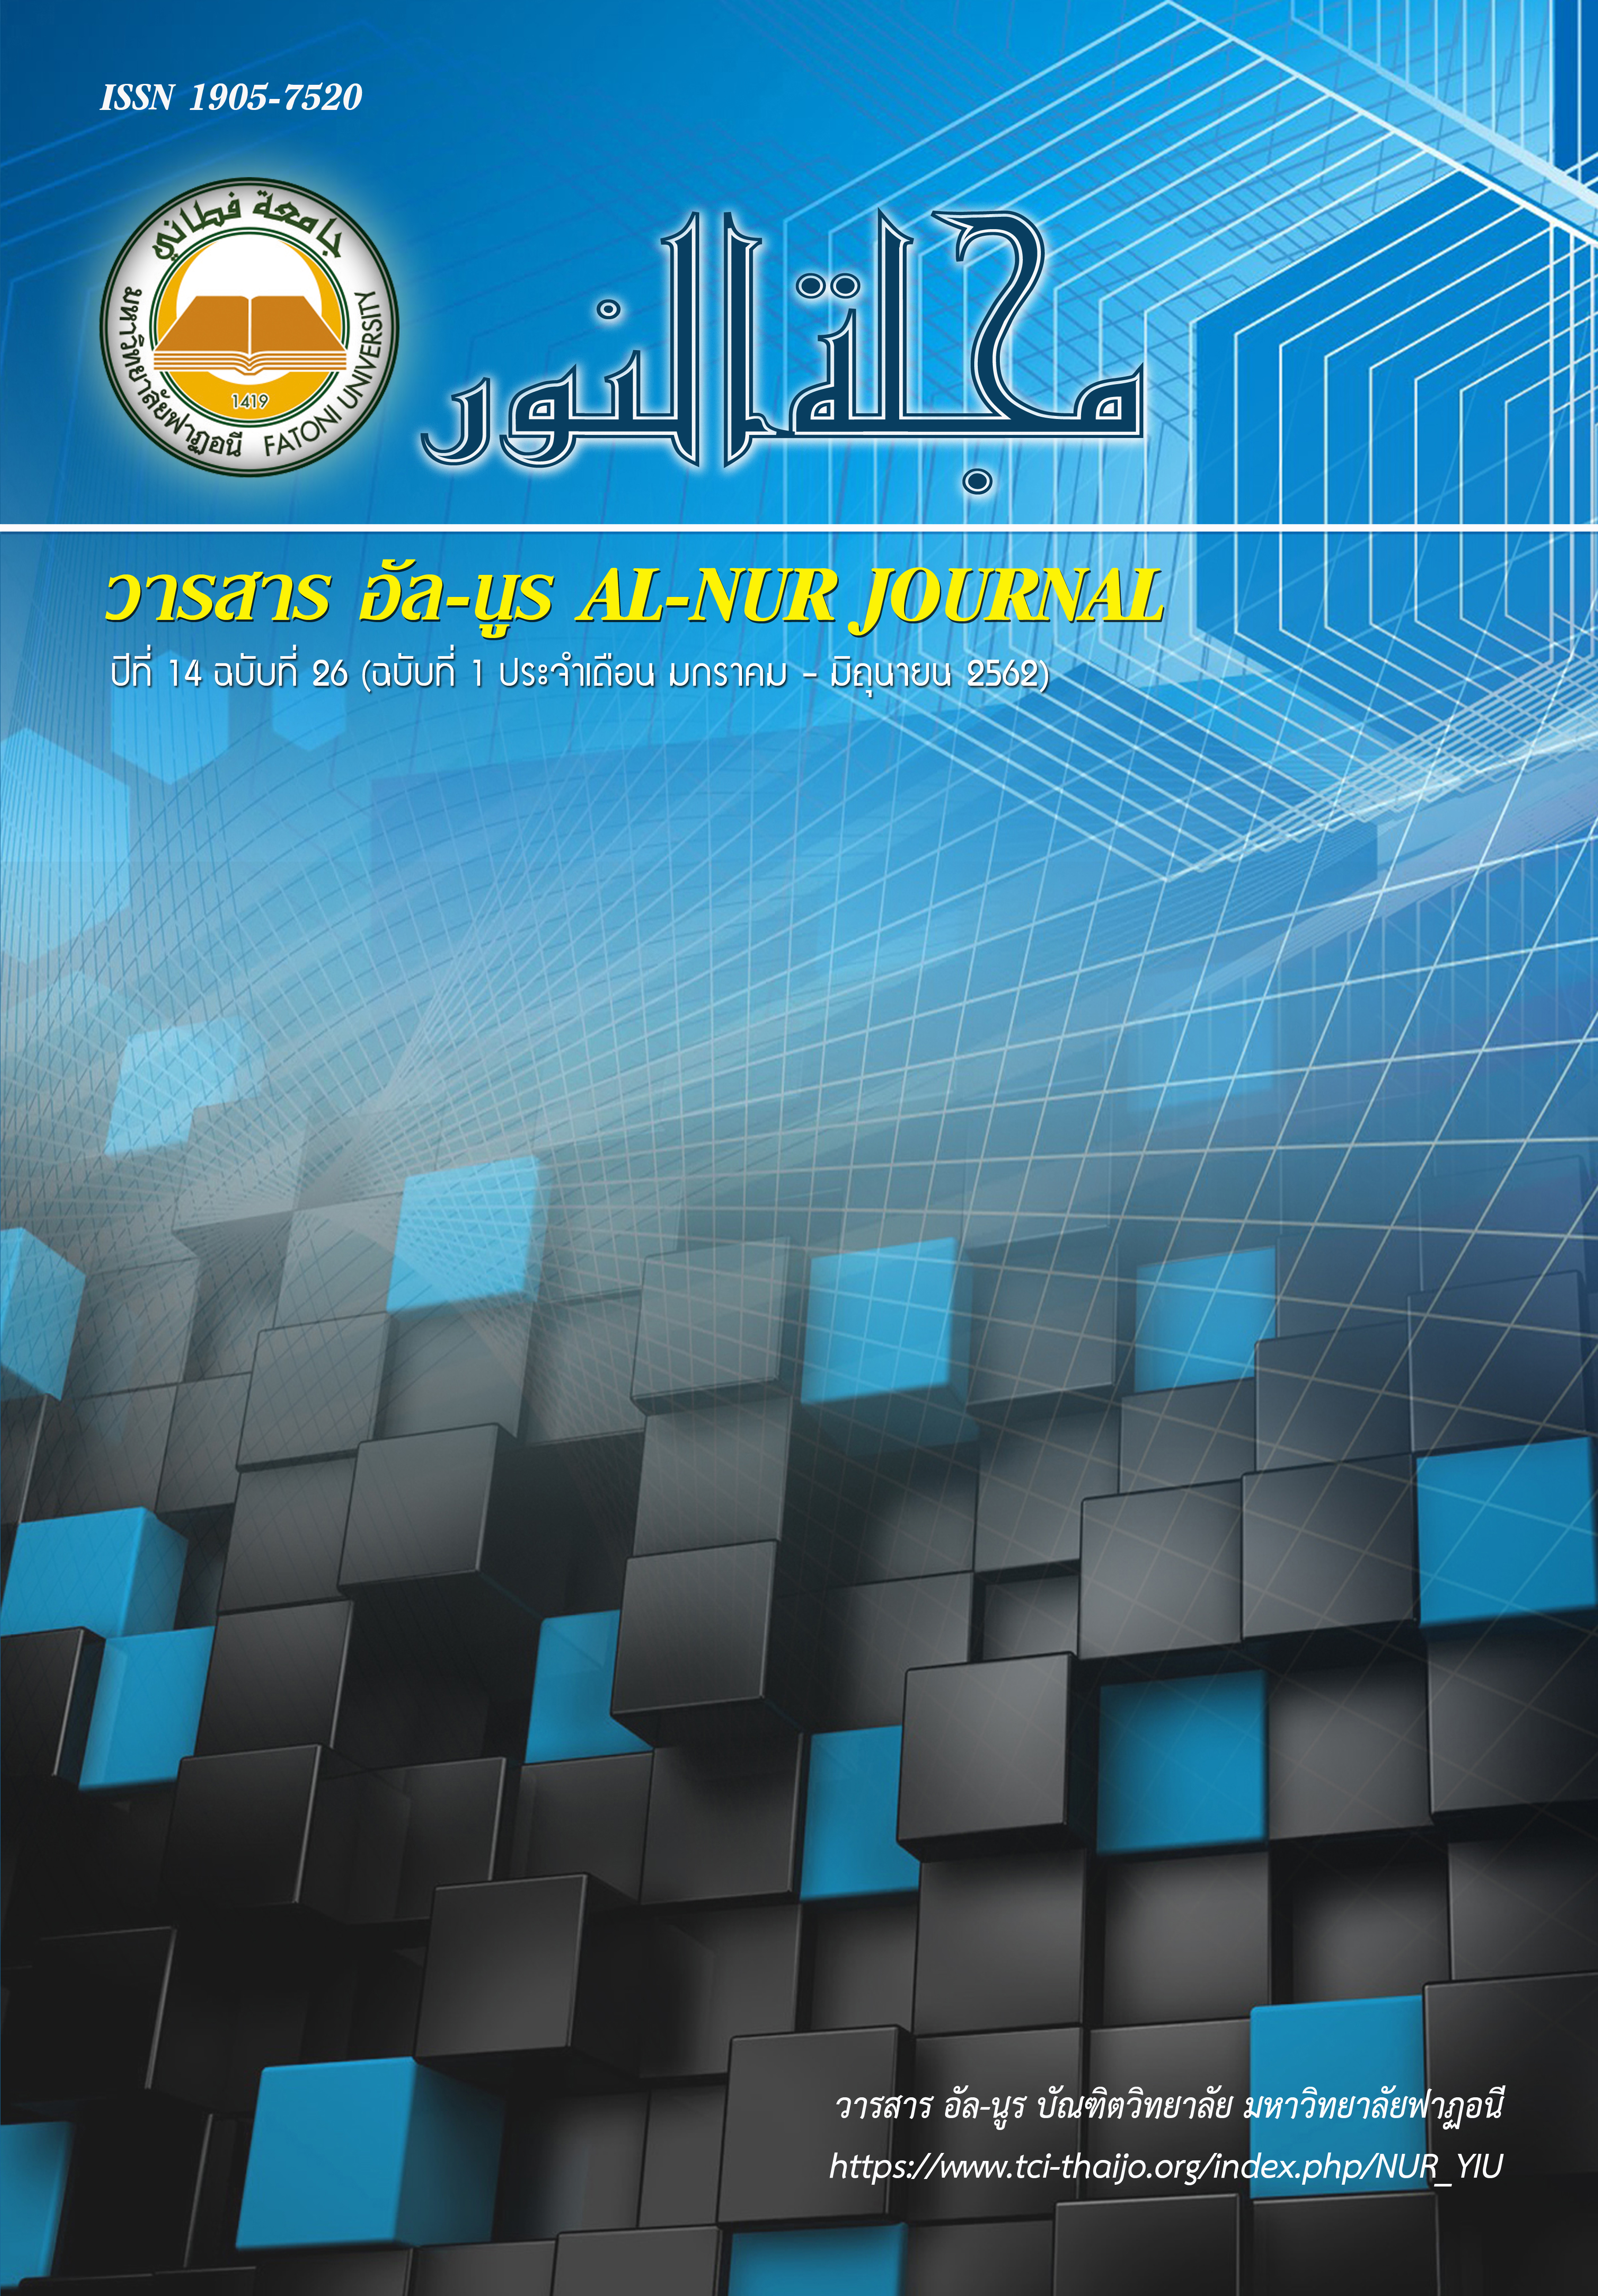 					View Vol. 14 No. 26 (2019): Al-Nur Journal of Graduate School of Fatoni University
				